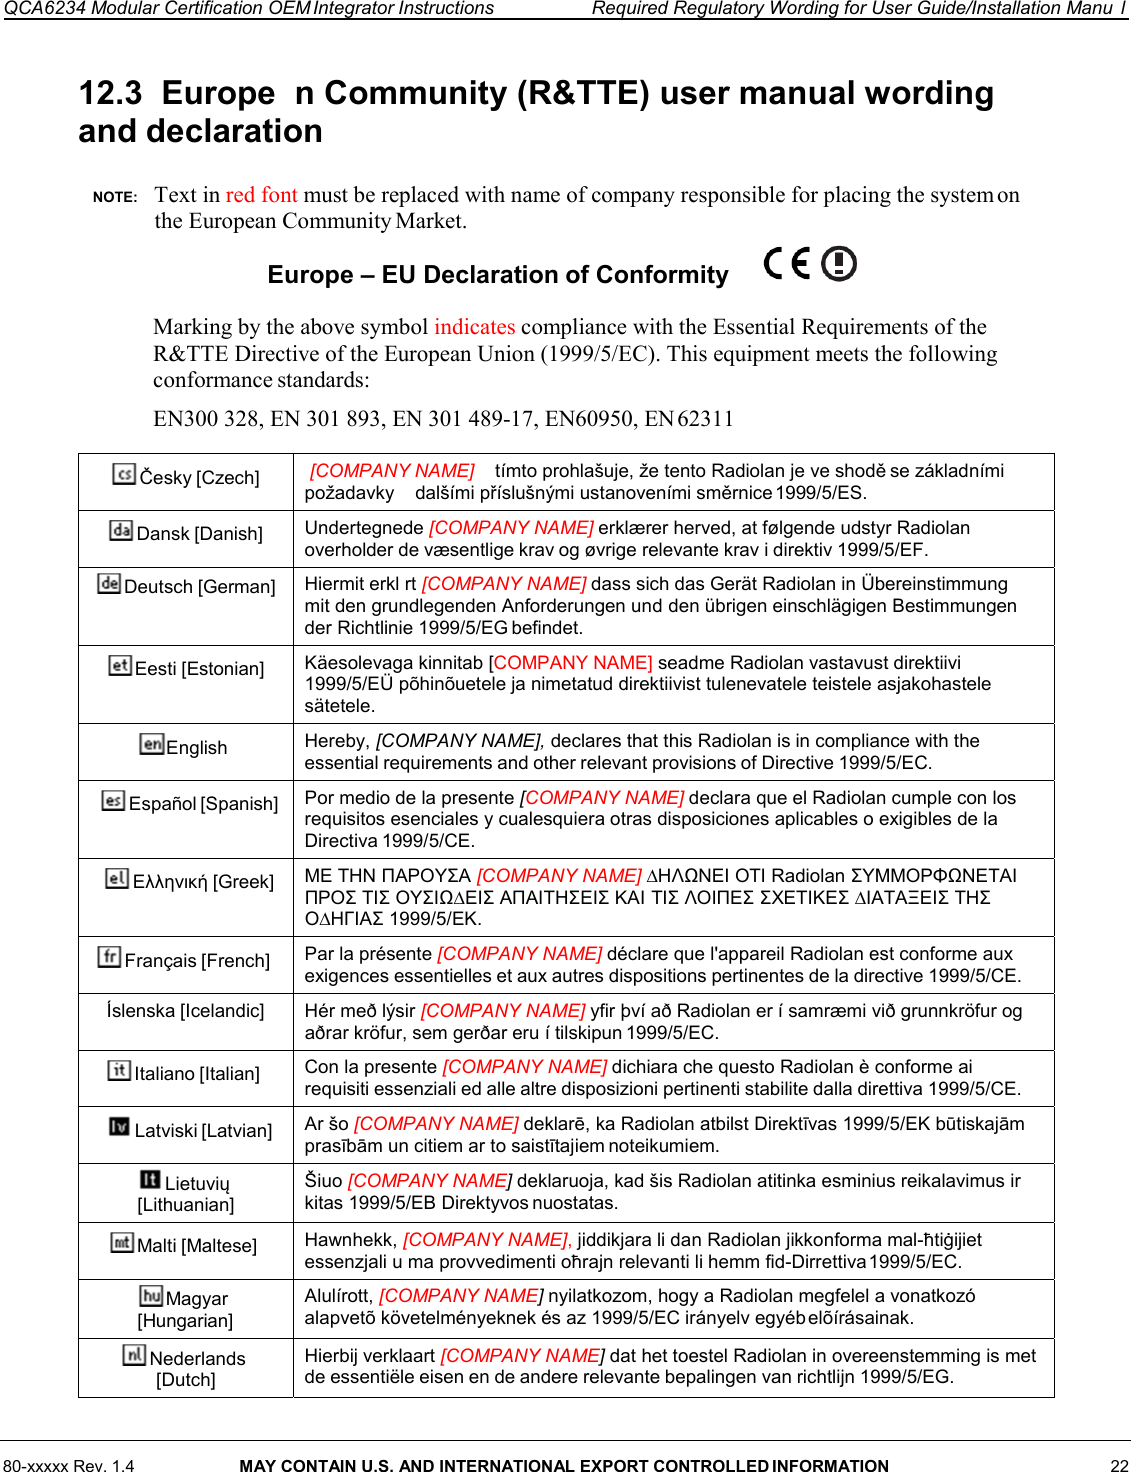 80-xxxxx Rev. 1.4  MAY CONTAIN U.S. AND INTERNATIONAL EXPORT CONTROLLED INFORMATION 22  QCA6234 Modular Certification OEM Integrator Instructions  Required Regulatory Wording for User Guide/Installation Manu  l    12.3  Europe  n Community (R&amp;TTE) user manual wording and declaration  NOTE:    Text in red font must be replaced with name of company responsible for placing the system on the European Community Market. Europe – EU Declaration of Conformity    Marking by the above symbol indicates compliance with the Essential Requirements of the R&amp;TTE Directive of the European Union (1999/5/EC). This equipment meets the following conformance standards: EN300 328, EN 301 893, EN 301 489-17, EN60950, EN 62311  Česky [Czech]  [COMPANY NAME]  tímto prohlašuje, že tento Radiolan je ve shodě se základními požadavky    dalšími příslušnými ustanoveními směrnice 1999/5/ES. Dansk [Danish]  Undertegnede [COMPANY NAME] erklærer herved, at følgende udstyr Radiolan overholder de væsentlige krav og øvrige relevante krav i direktiv 1999/5/EF. Deutsch [German]  Hiermit erkl rt [COMPANY NAME] dass sich das Gerät Radiolan in Übereinstimmung mit den grundlegenden Anforderungen und den übrigen einschlägigen Bestimmungen der Richtlinie 1999/5/EG befindet. Eesti [Estonian]  Käesolevaga kinnitab [COMPANY NAME] seadme Radiolan vastavust direktiivi 1999/5/EÜ põhinõuetele ja nimetatud direktiivist tulenevatele teistele asjakohastele sätetele. English  Hereby, [COMPANY NAME], declares that this Radiolan is in compliance with the essential requirements and other relevant provisions of Directive 1999/5/EC. Español [Spanish]  Por medio de la presente [COMPANY NAME] declara que el Radiolan cumple con los requisitos esenciales y cualesquiera otras disposiciones aplicables o exigibles de la Directiva 1999/5/CE. Ελληνική [Greek]  ΜΕ ΤΗΝ ΠΑΡΟΥΣΑ [COMPANY NAME] ∆ΗΛΩΝΕΙ ΟΤΙ Radiolan ΣΥΜΜΟΡΦΩΝΕΤΑΙ ΠΡΟΣ ΤΙΣ ΟΥΣΙΩ∆ΕΙΣ ΑΠΑΙΤΗΣΕΙΣ ΚΑΙ ΤΙΣ ΛΟΙΠΕΣ ΣΧΕΤΙΚΕΣ ∆ΙΑΤΑΞΕΙΣ ΤΗΣ Ο∆ΗΓΙΑΣ 1999/5/ΕΚ. Français [French]  Par la présente [COMPANY NAME] déclare que l&apos;appareil Radiolan est conforme aux exigences essentielles et aux autres dispositions pertinentes de la directive 1999/5/CE. Íslenska [Icelandic]  Hér með lýsir [COMPANY NAME] yfir því að Radiolan er í samræmi við grunnkröfur og aðrar kröfur, sem gerðar eru í tilskipun 1999/5/EC. Italiano [Italian]  Con la presente [COMPANY NAME] dichiara che questo Radiolan è conforme ai requisiti essenziali ed alle altre disposizioni pertinenti stabilite dalla direttiva 1999/5/CE. Latviski [Latvian]  Ar šo [COMPANY NAME] deklarē, ka Radiolan atbilst Direktīvas 1999/5/EK būtiskajām prasībām un citiem ar to saistītajiem noteikumiem. Lietuvių [Lithuanian] Šiuo [COMPANY NAME] deklaruoja, kad šis Radiolan atitinka esminius reikalavimus ir kitas 1999/5/EB Direktyvos nuostatas. Malti [Maltese]  Hawnhekk, [COMPANY NAME], jiddikjara li dan Radiolan jikkonforma mal-ħtiġijiet essenzjali u ma provvedimenti oħrajn relevanti li hemm fid-Dirrettiva 1999/5/EC. Magyar [Hungarian] Alulírott, [COMPANY NAME] nyilatkozom, hogy a Radiolan megfelel a vonatkozó alapvetõ követelményeknek és az 1999/5/EC irányelv egyéb elõírásainak. Nederlands [Dutch] Hierbij verklaart [COMPANY NAME] dat het toestel Radiolan in overeenstemming is met de essentiële eisen en de andere relevante bepalingen van richtlijn 1999/5/EG. 